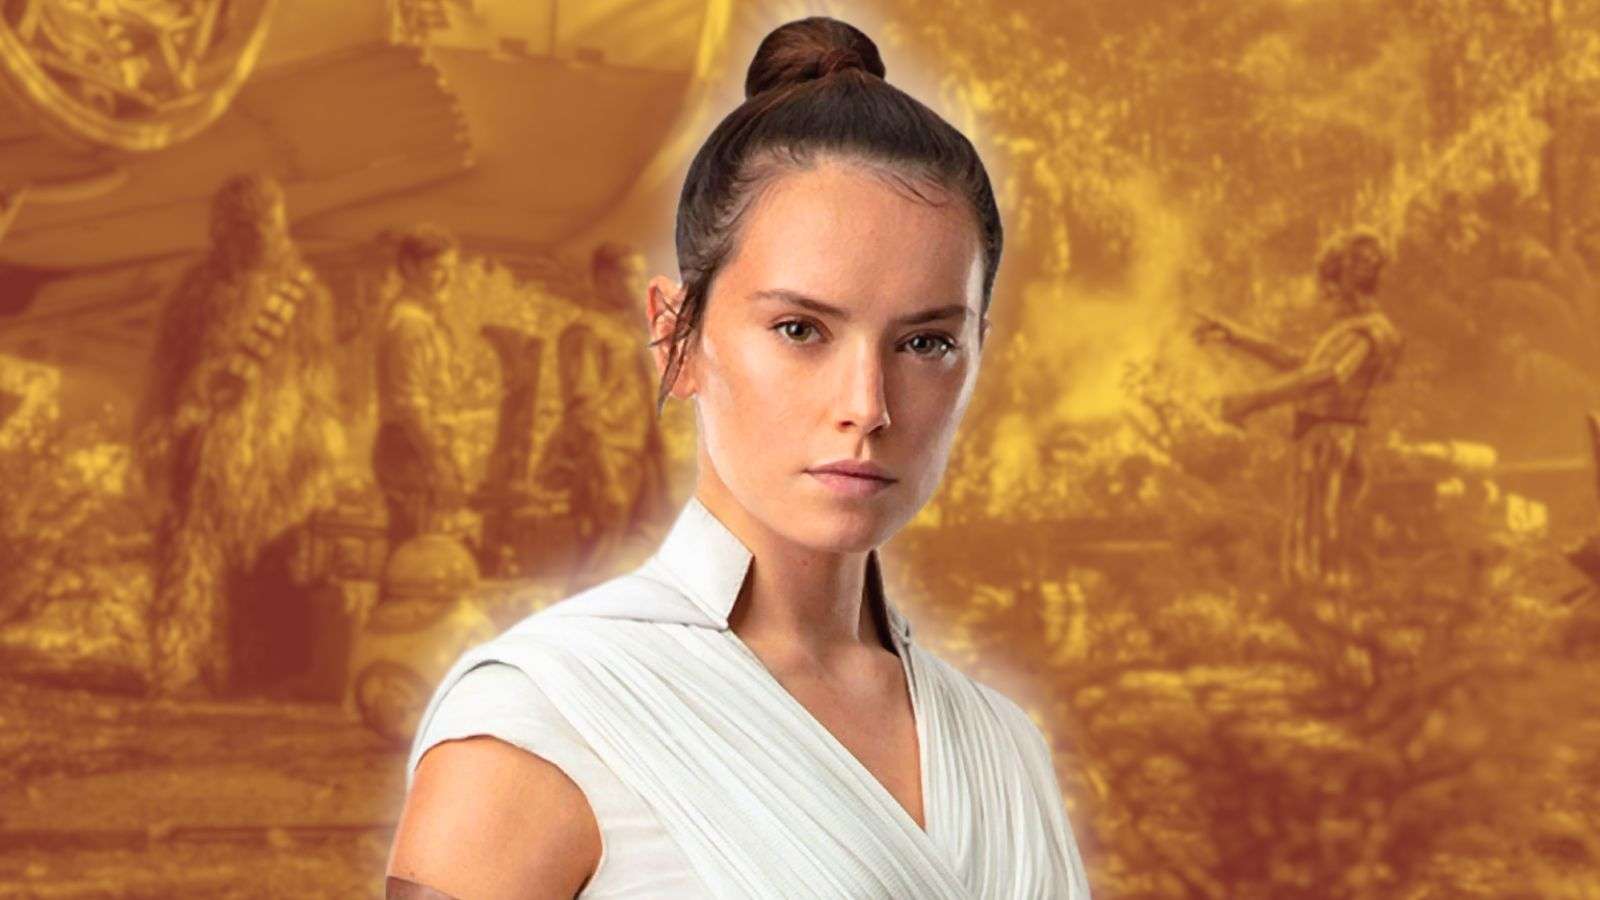 Daisy Ridley as Rey Skywalker in Star Wars The Force Awakens.